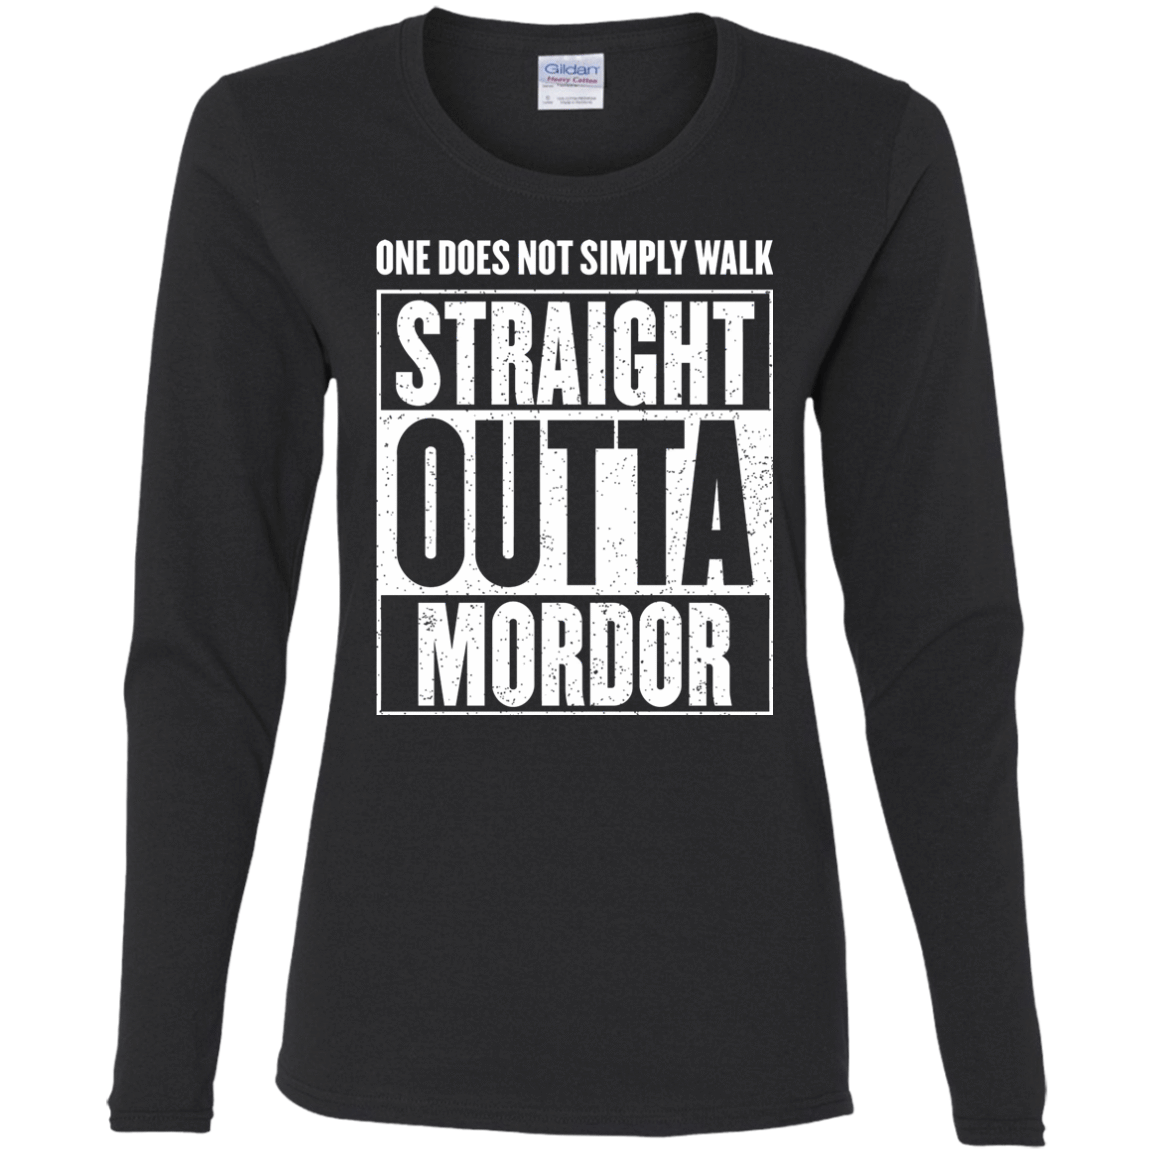 T-Shirts Black / S Straight Outta Mordor Women's Long Sleeve T-Shirt